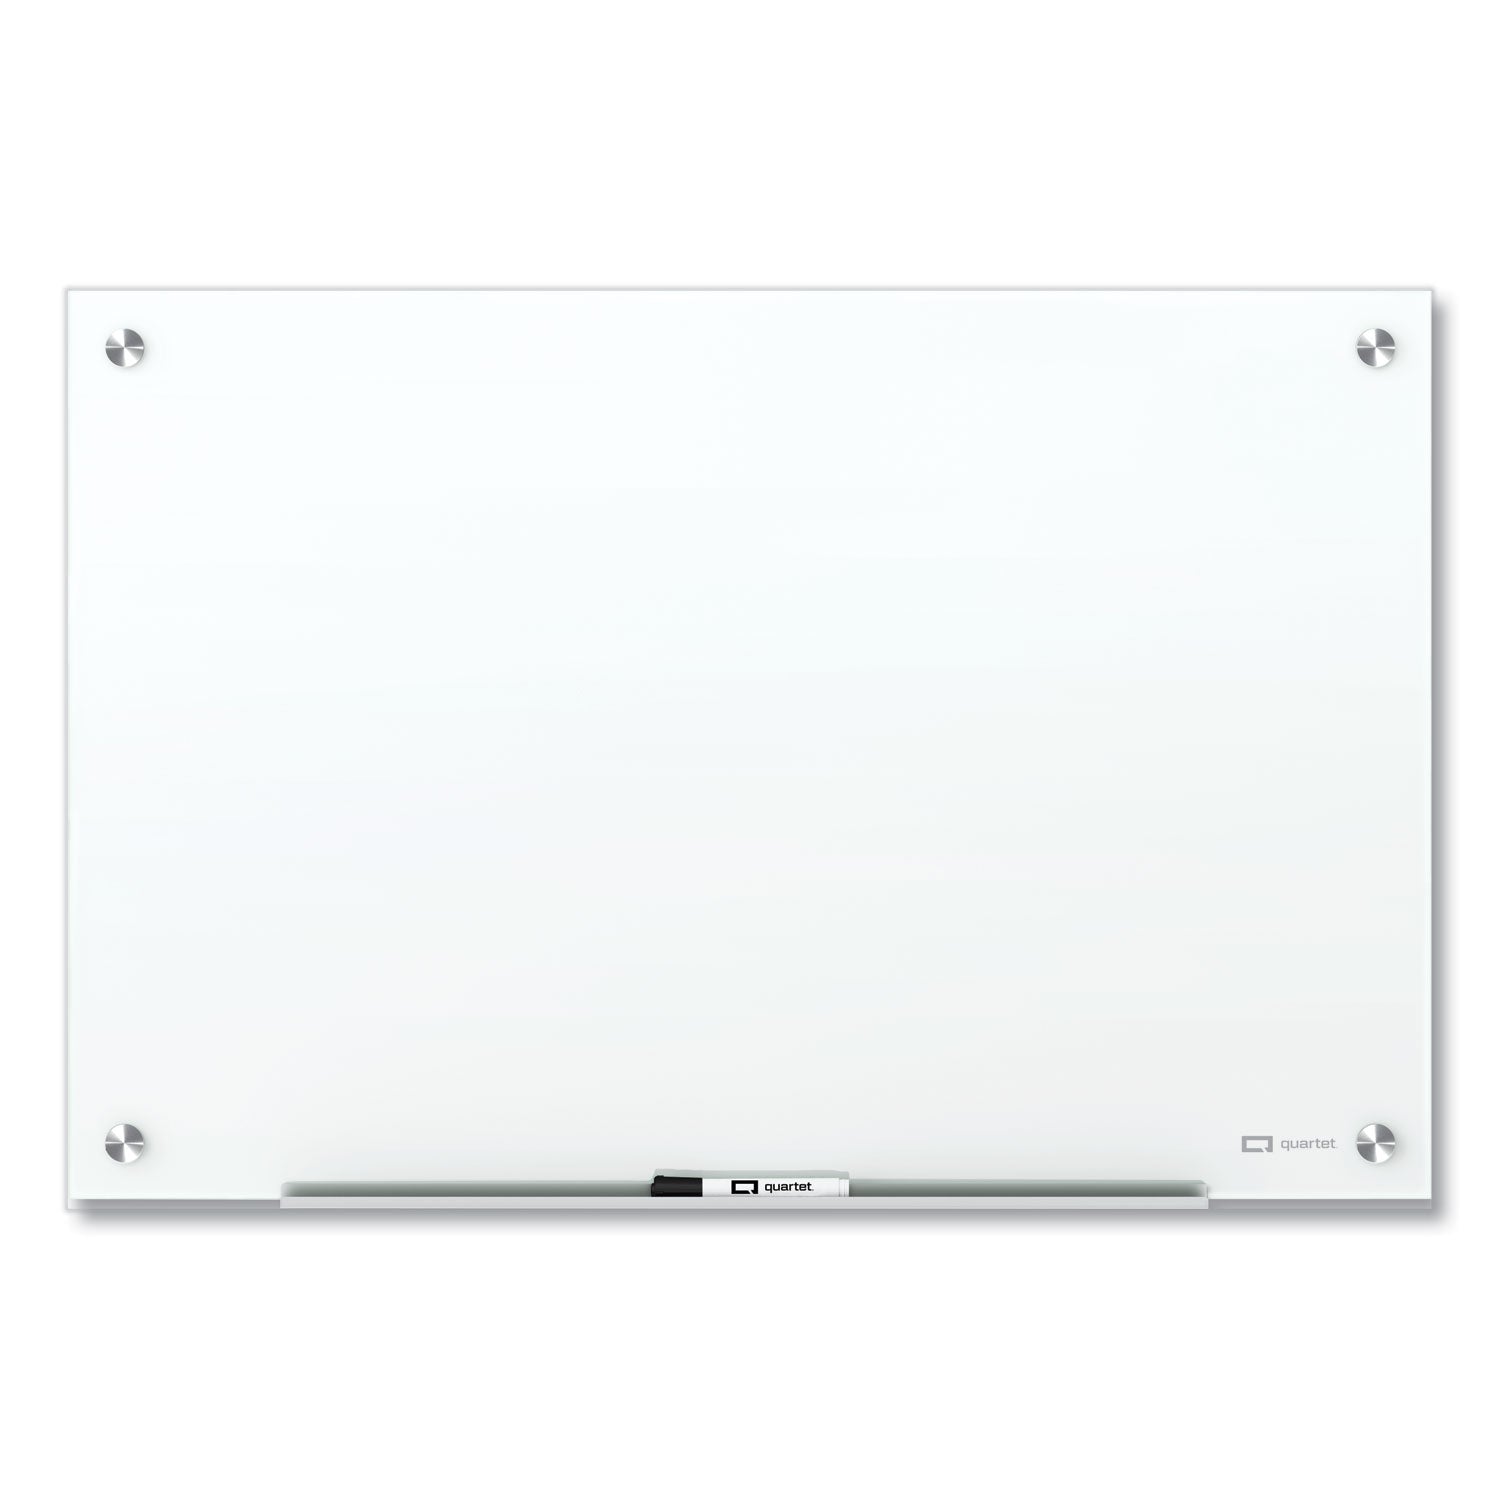 brilliance-glass-dry-erase-boards-24-x-18-white-surface_qrtg22418w - 1